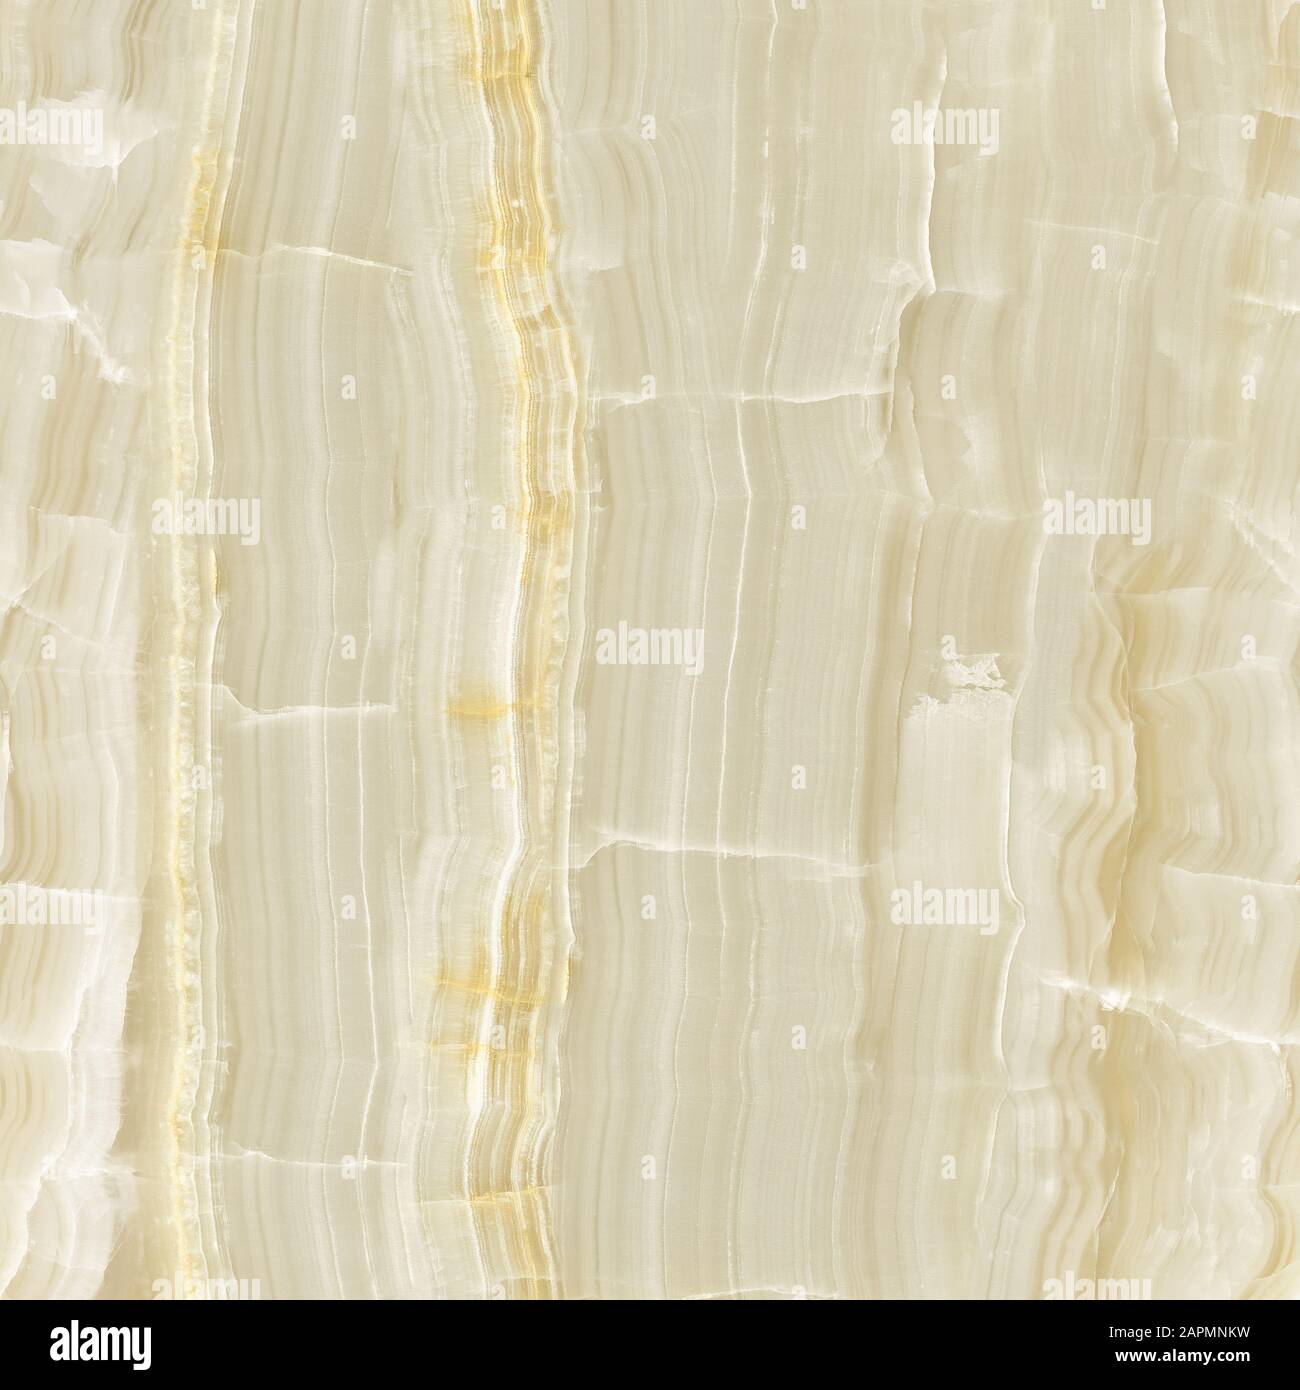 Italian Marble Splendor: High-Res Stock Image Collection for Elevated Designs - Carrara, Statuario, Calacatta Varieties Revealed! Stock Photo